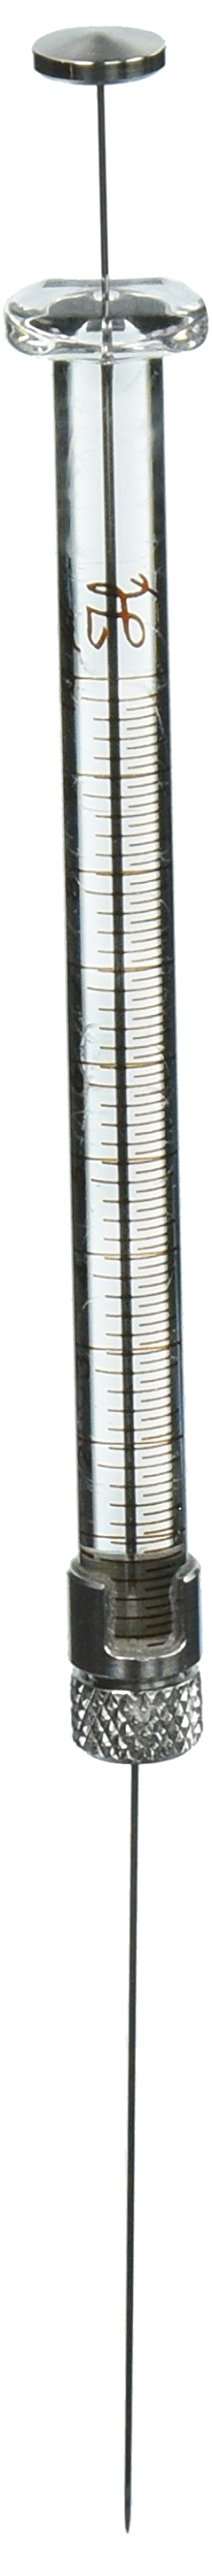 Hamilton 80030 Syringe, 1701RN, 10 Microliter